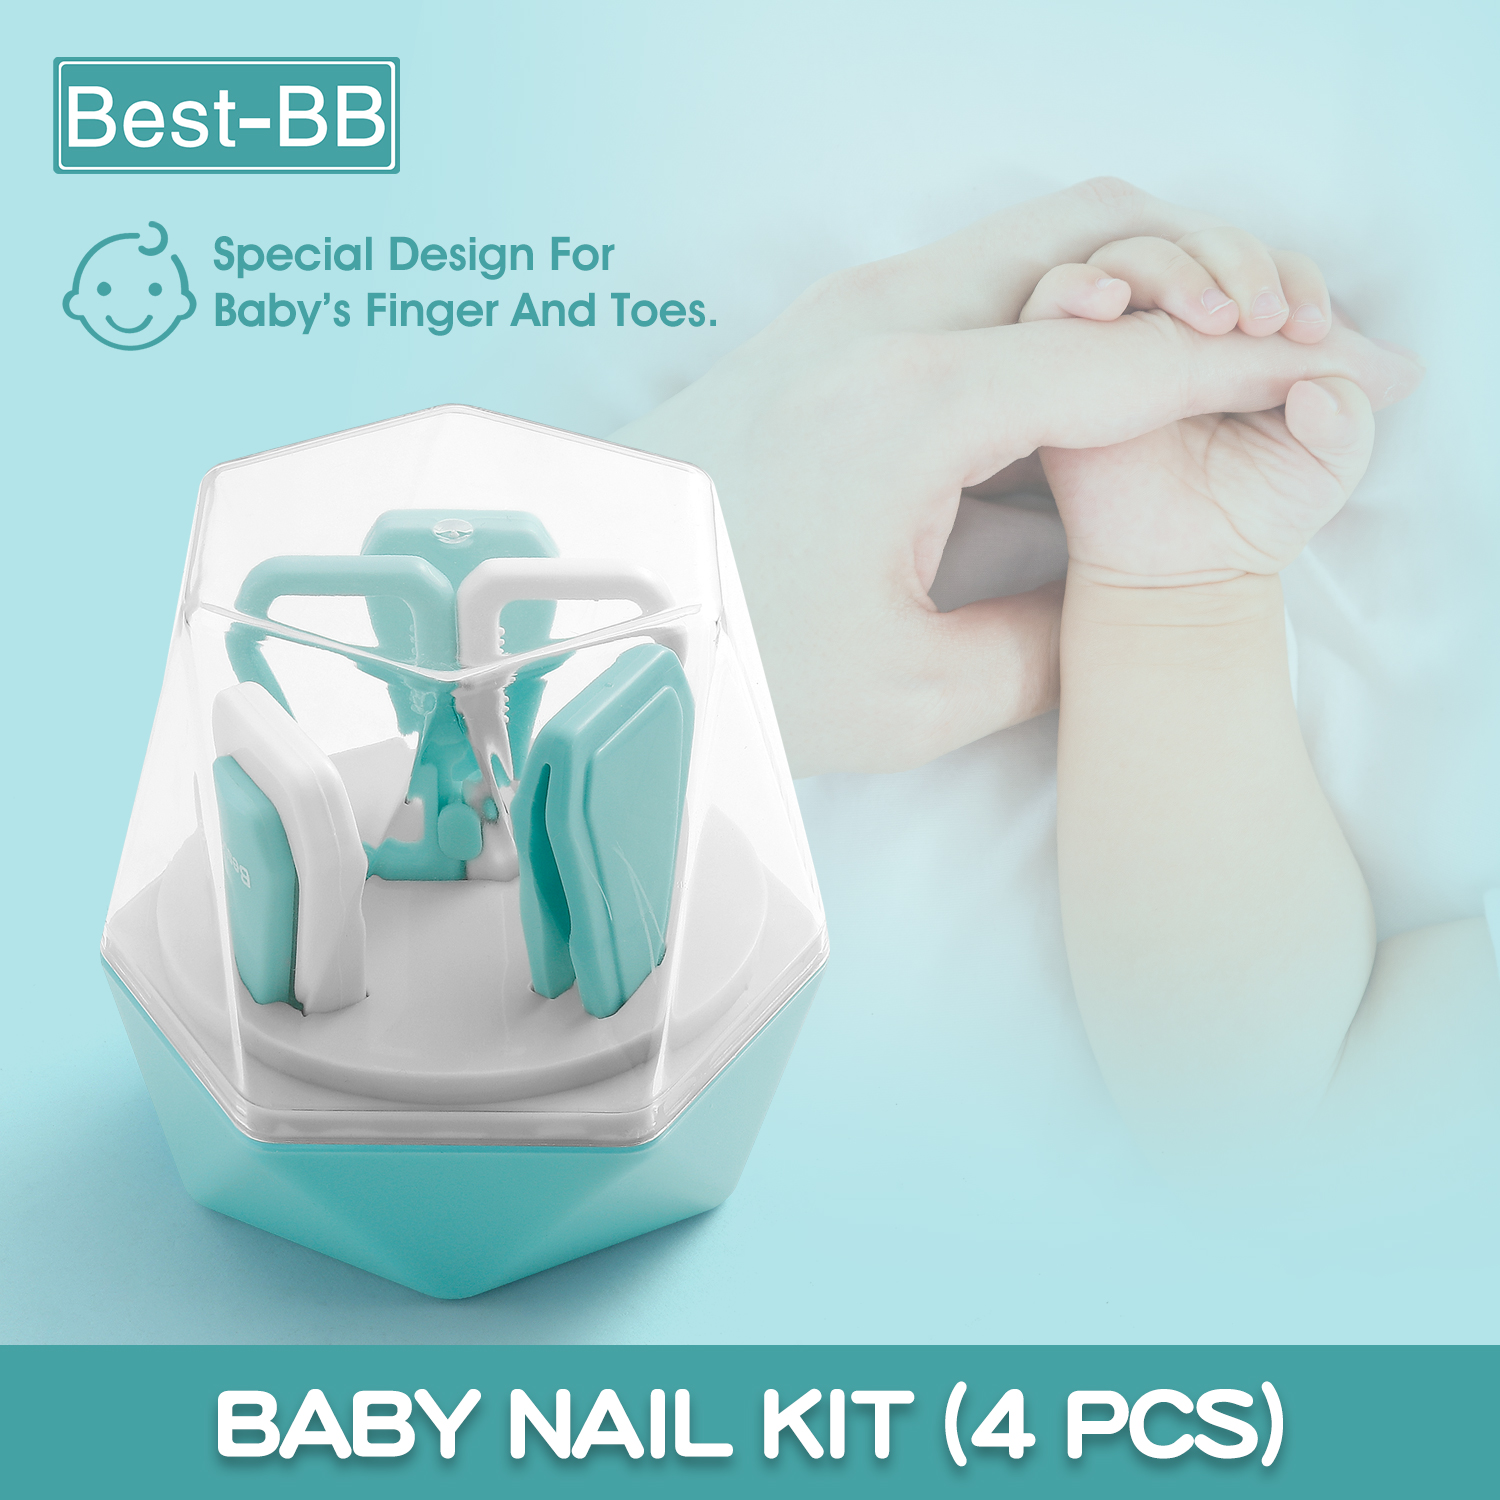 1-4 pcs baby nail care kit